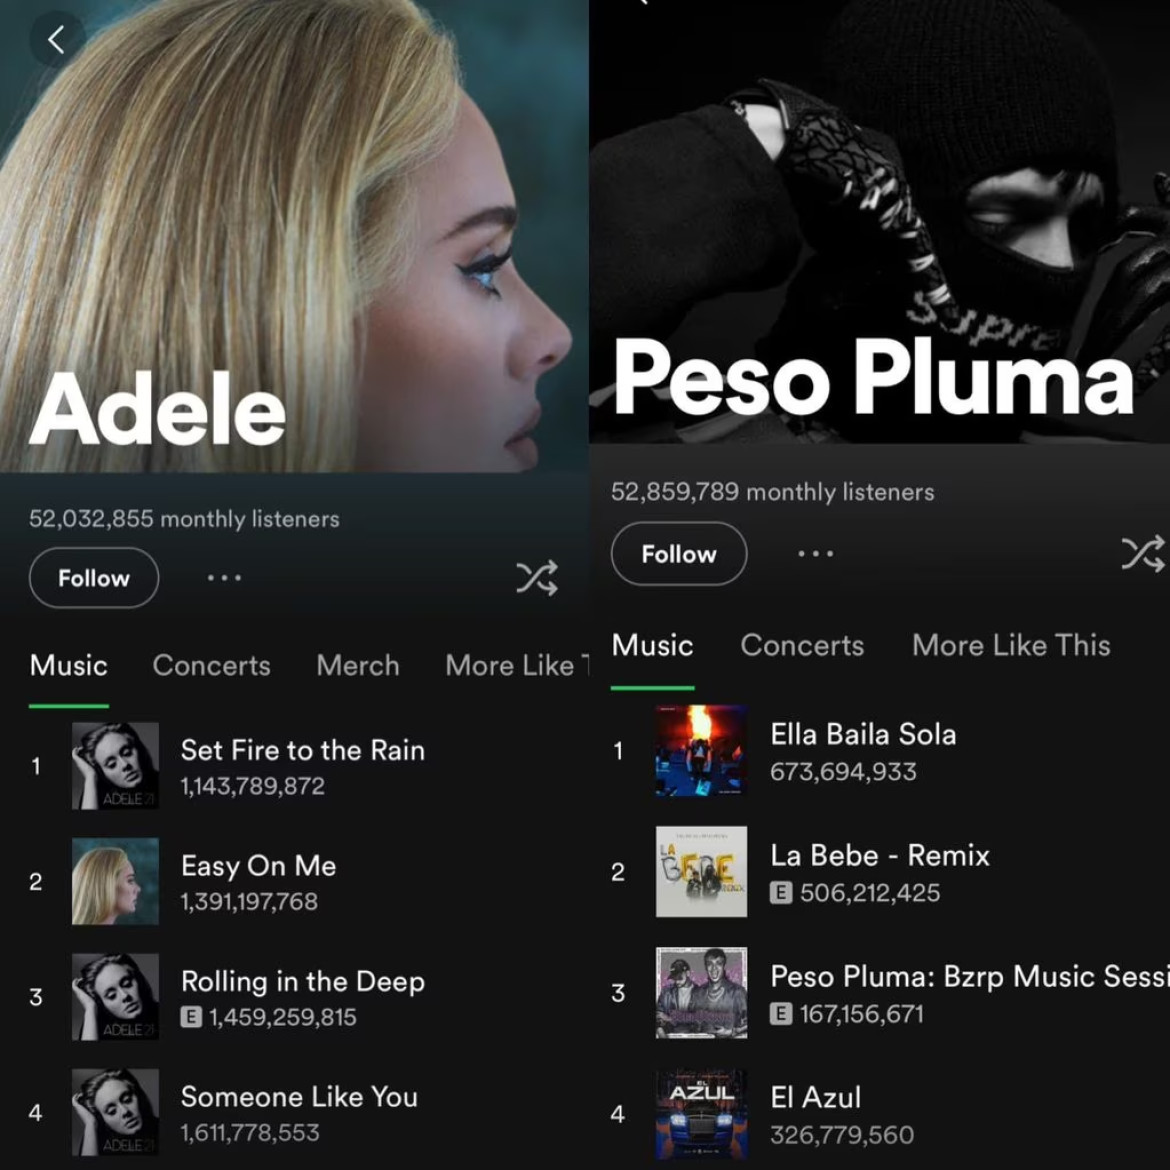 Peso Pluma superó a Adele. Foto: Spotify.